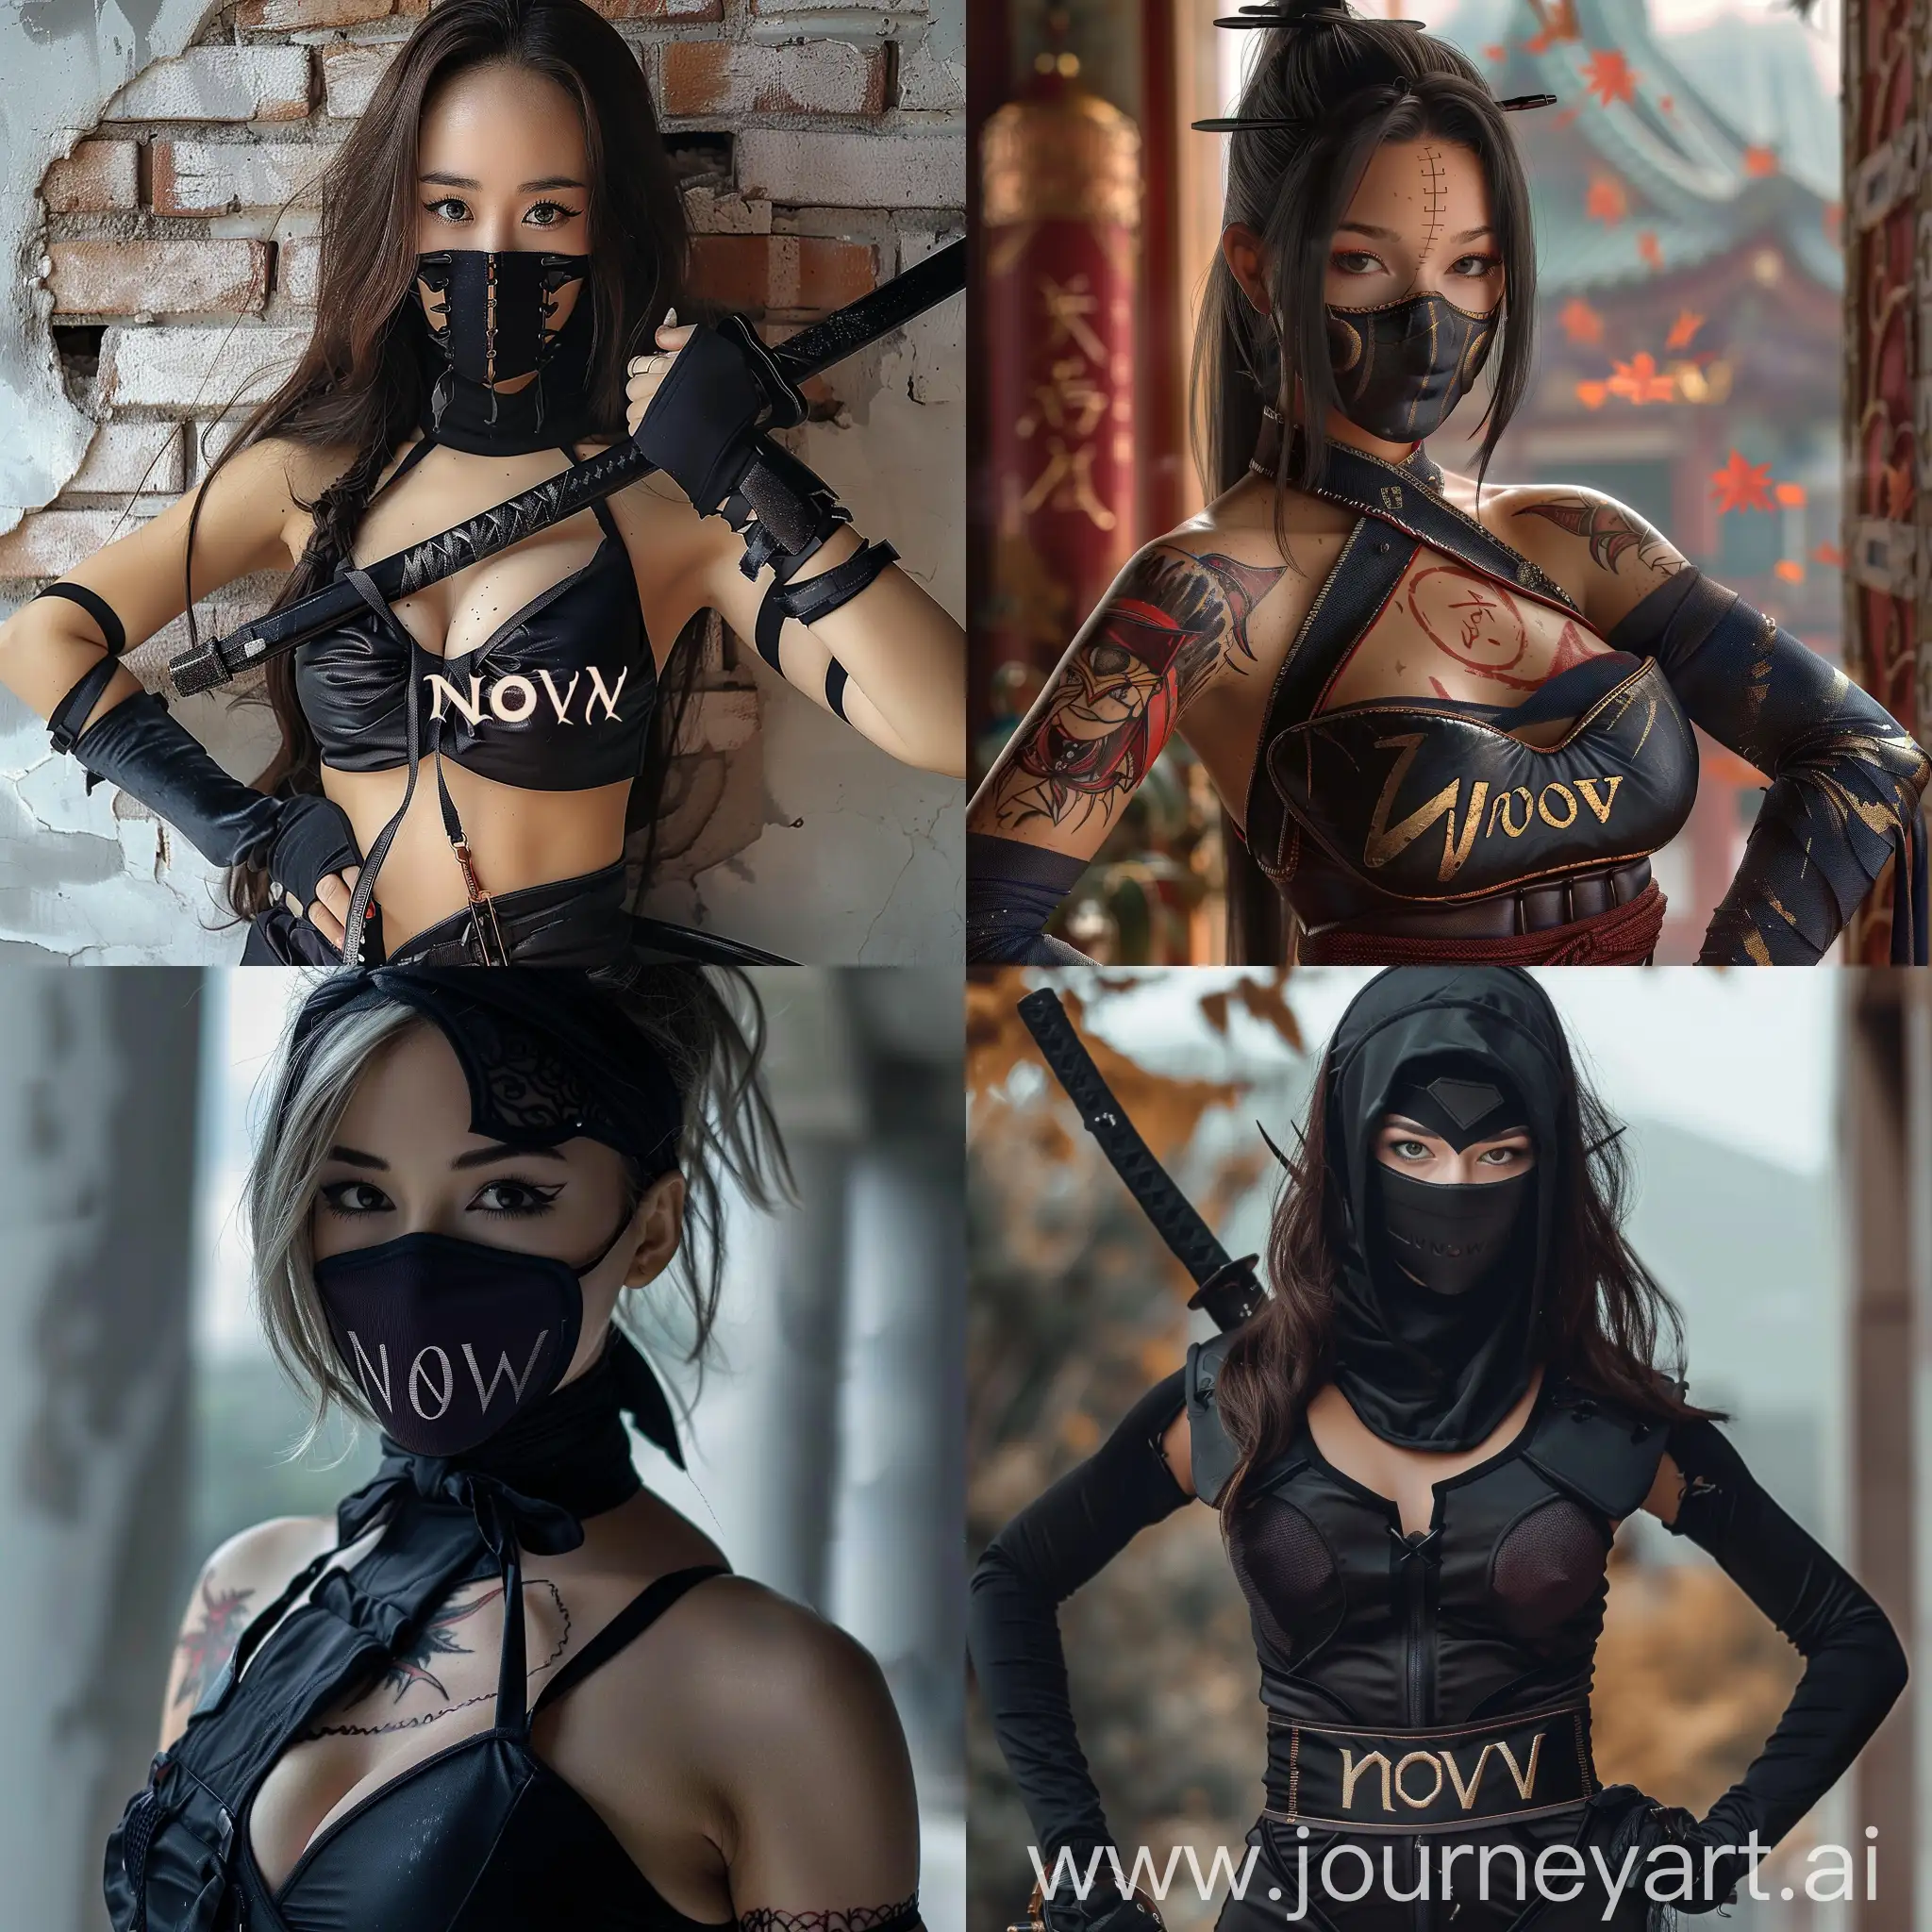 Stylish-Ninja-Woman-with-NOVA-Inscription